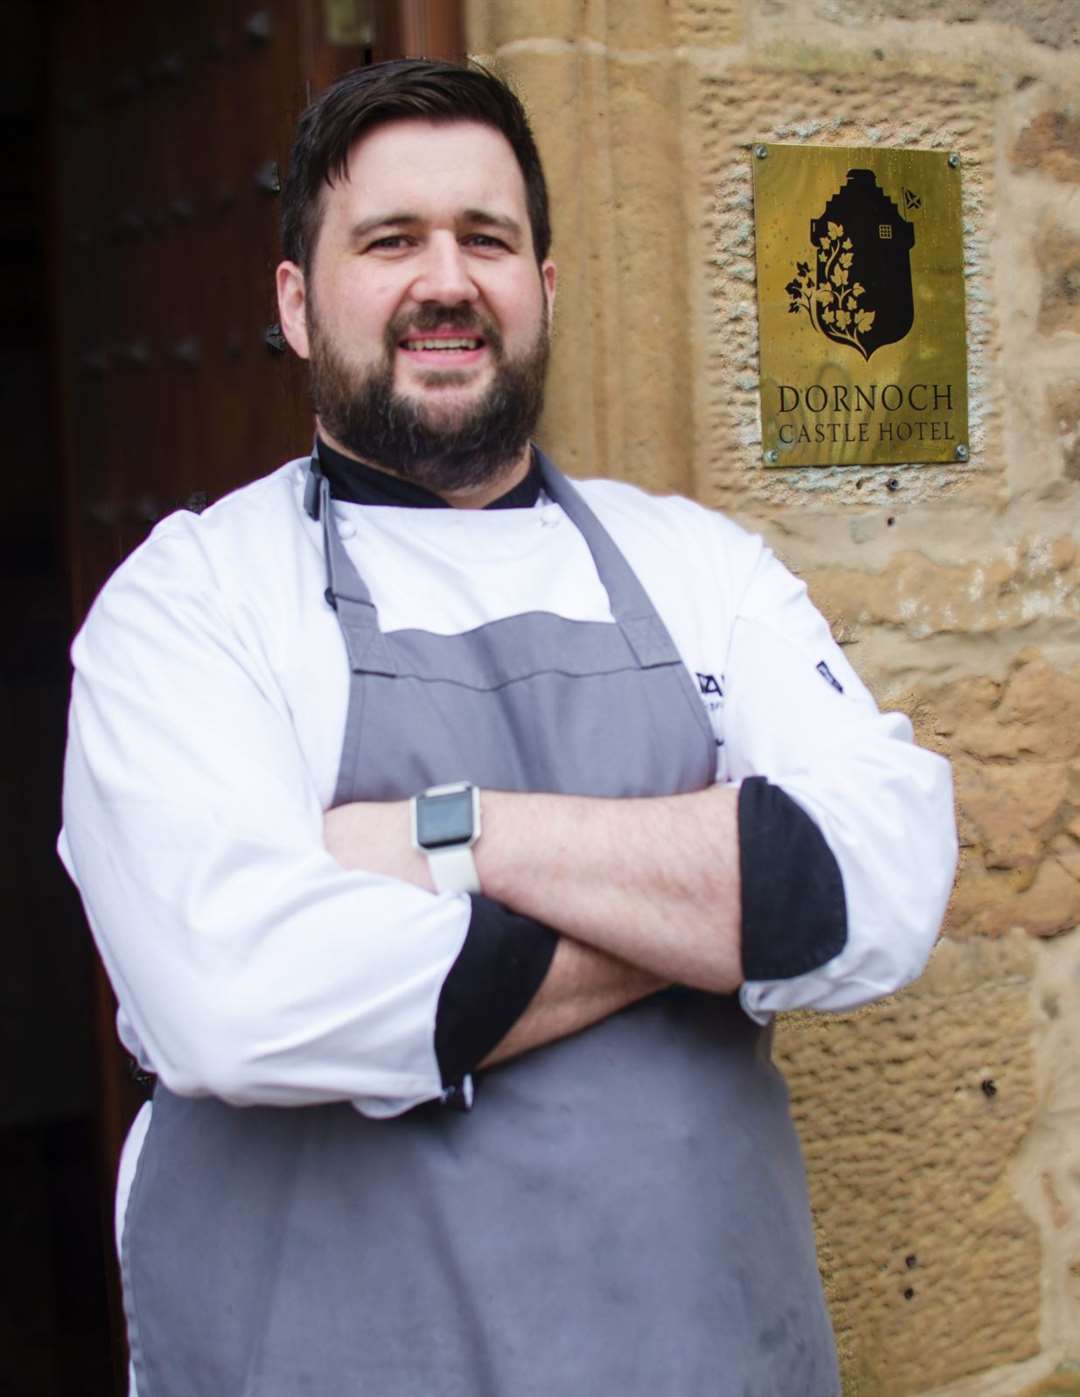 Grant Macnicol during his time as head chef at Dornoch Castle Hotel.